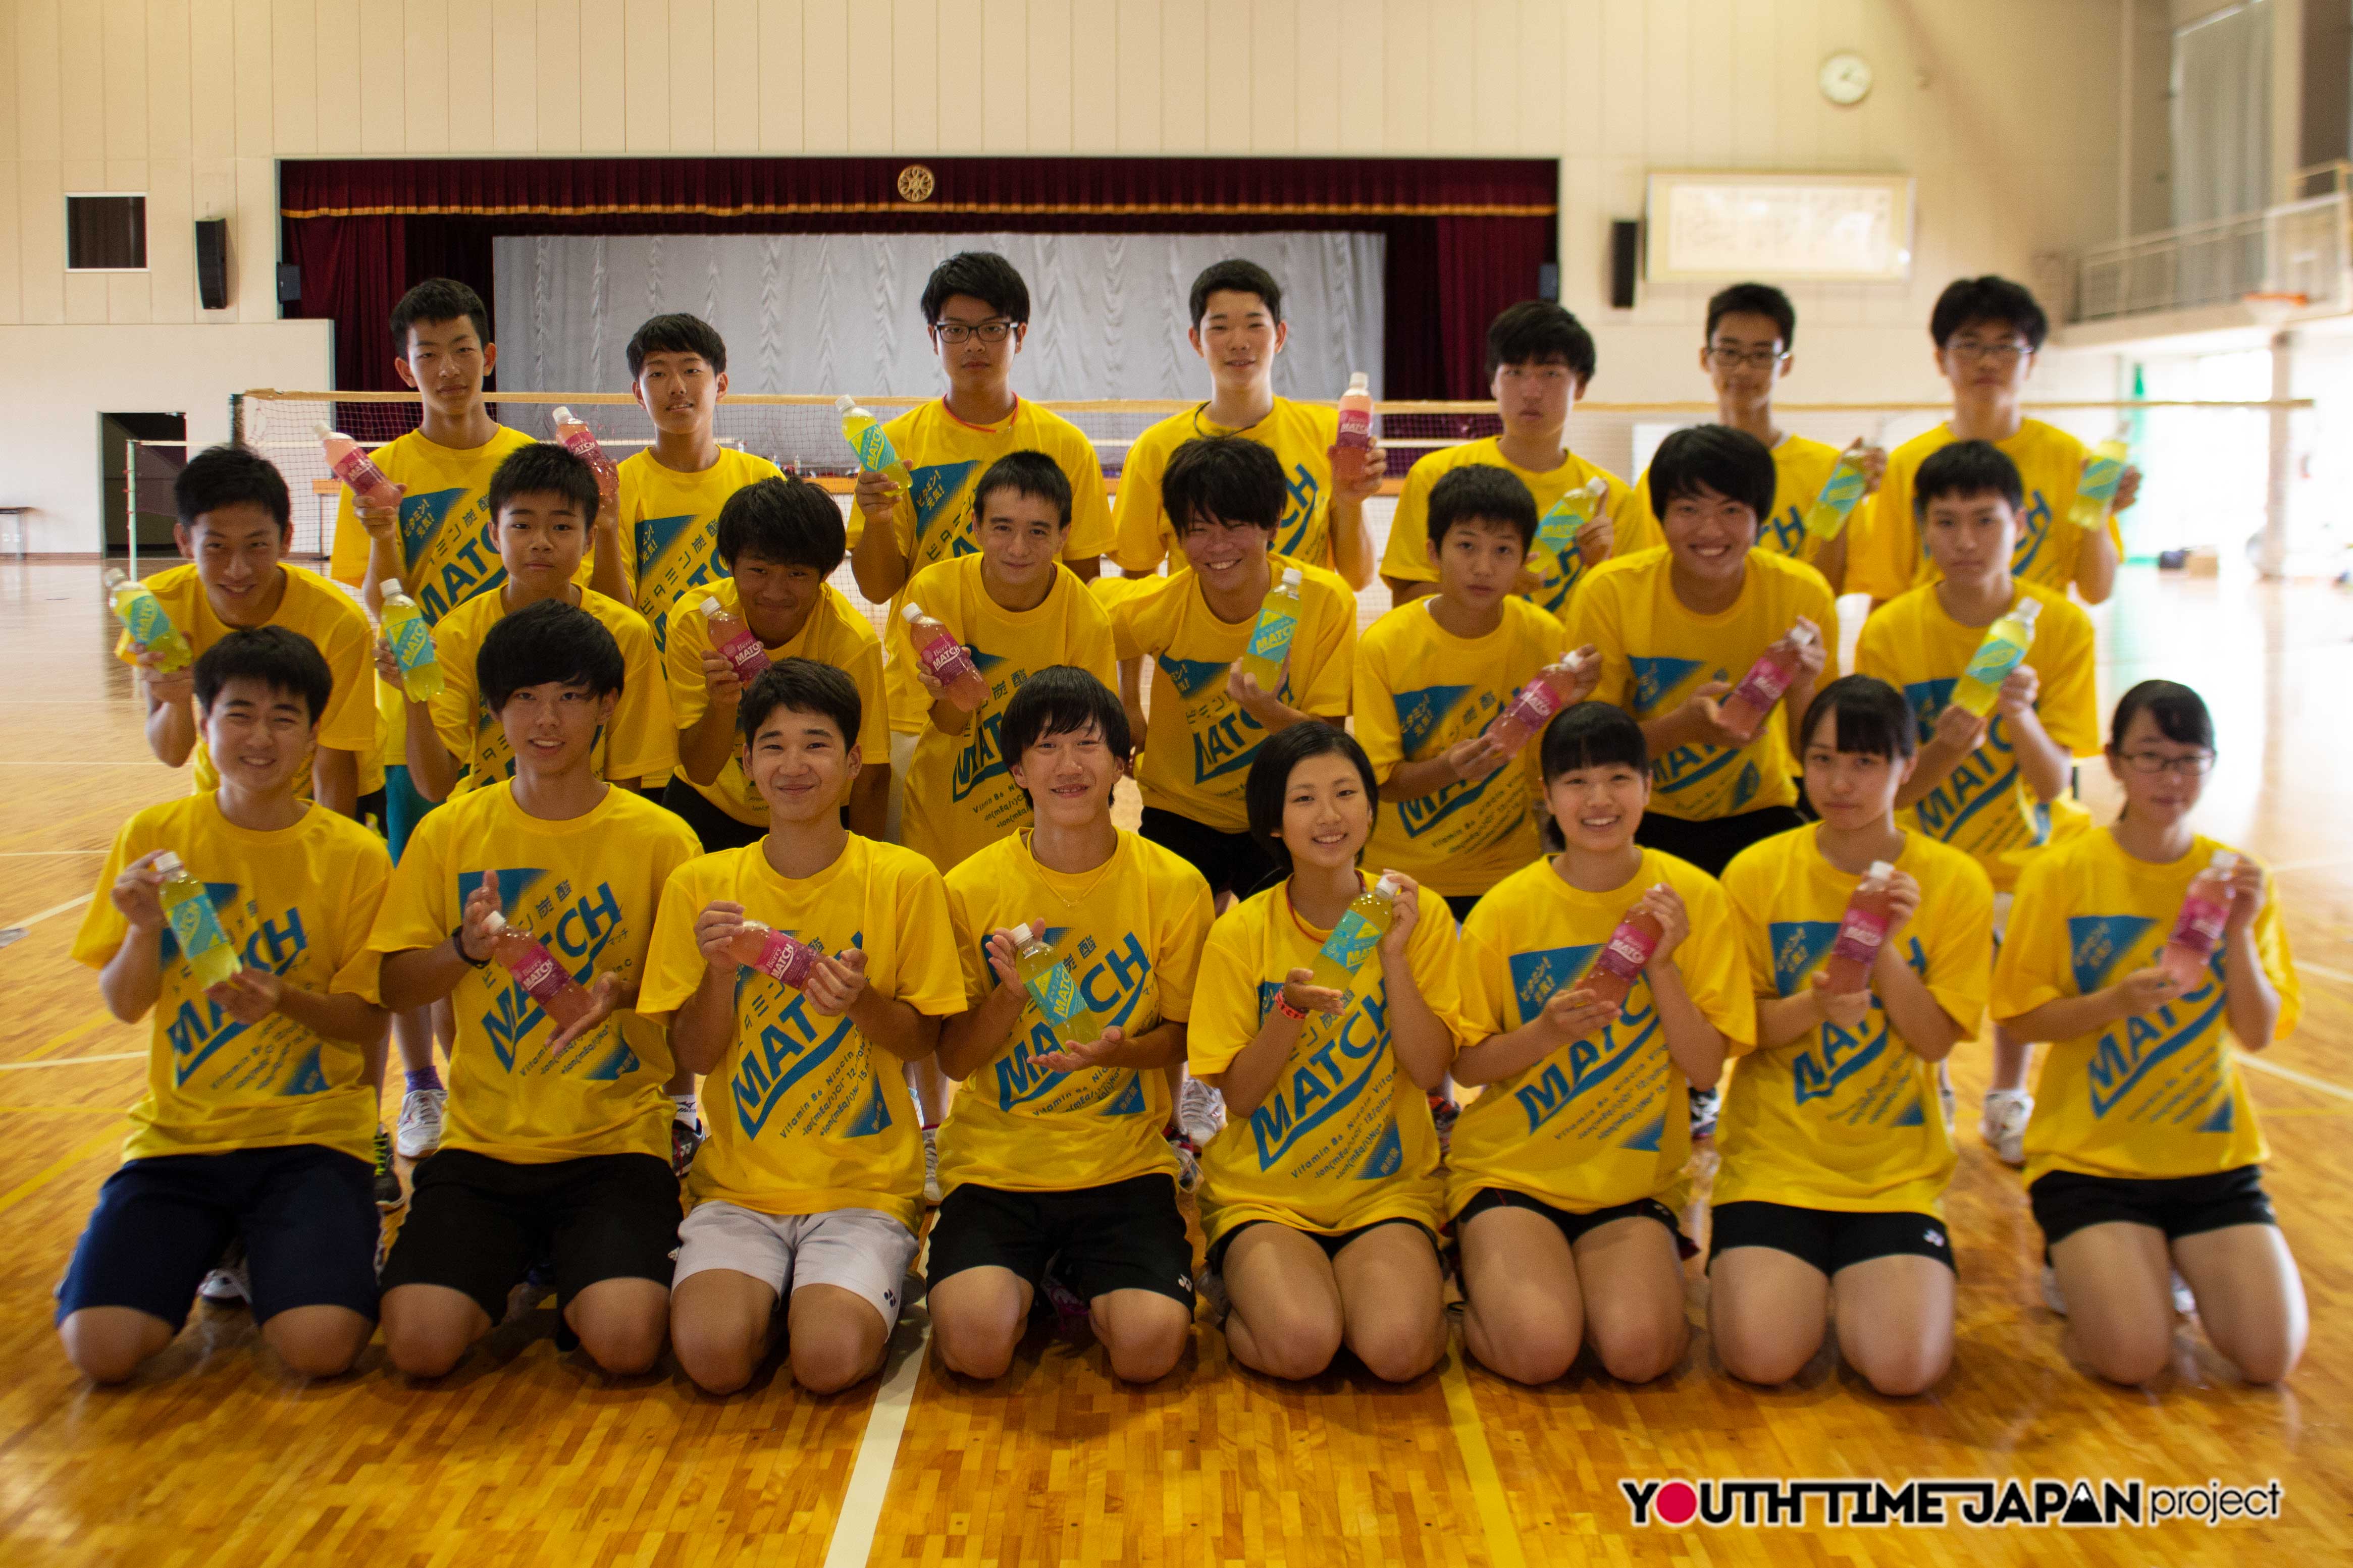 Bukatsu魂 Supported By Match Season7 帝京長岡高等学校 バドミントン部 Youth Time Japan Project Web